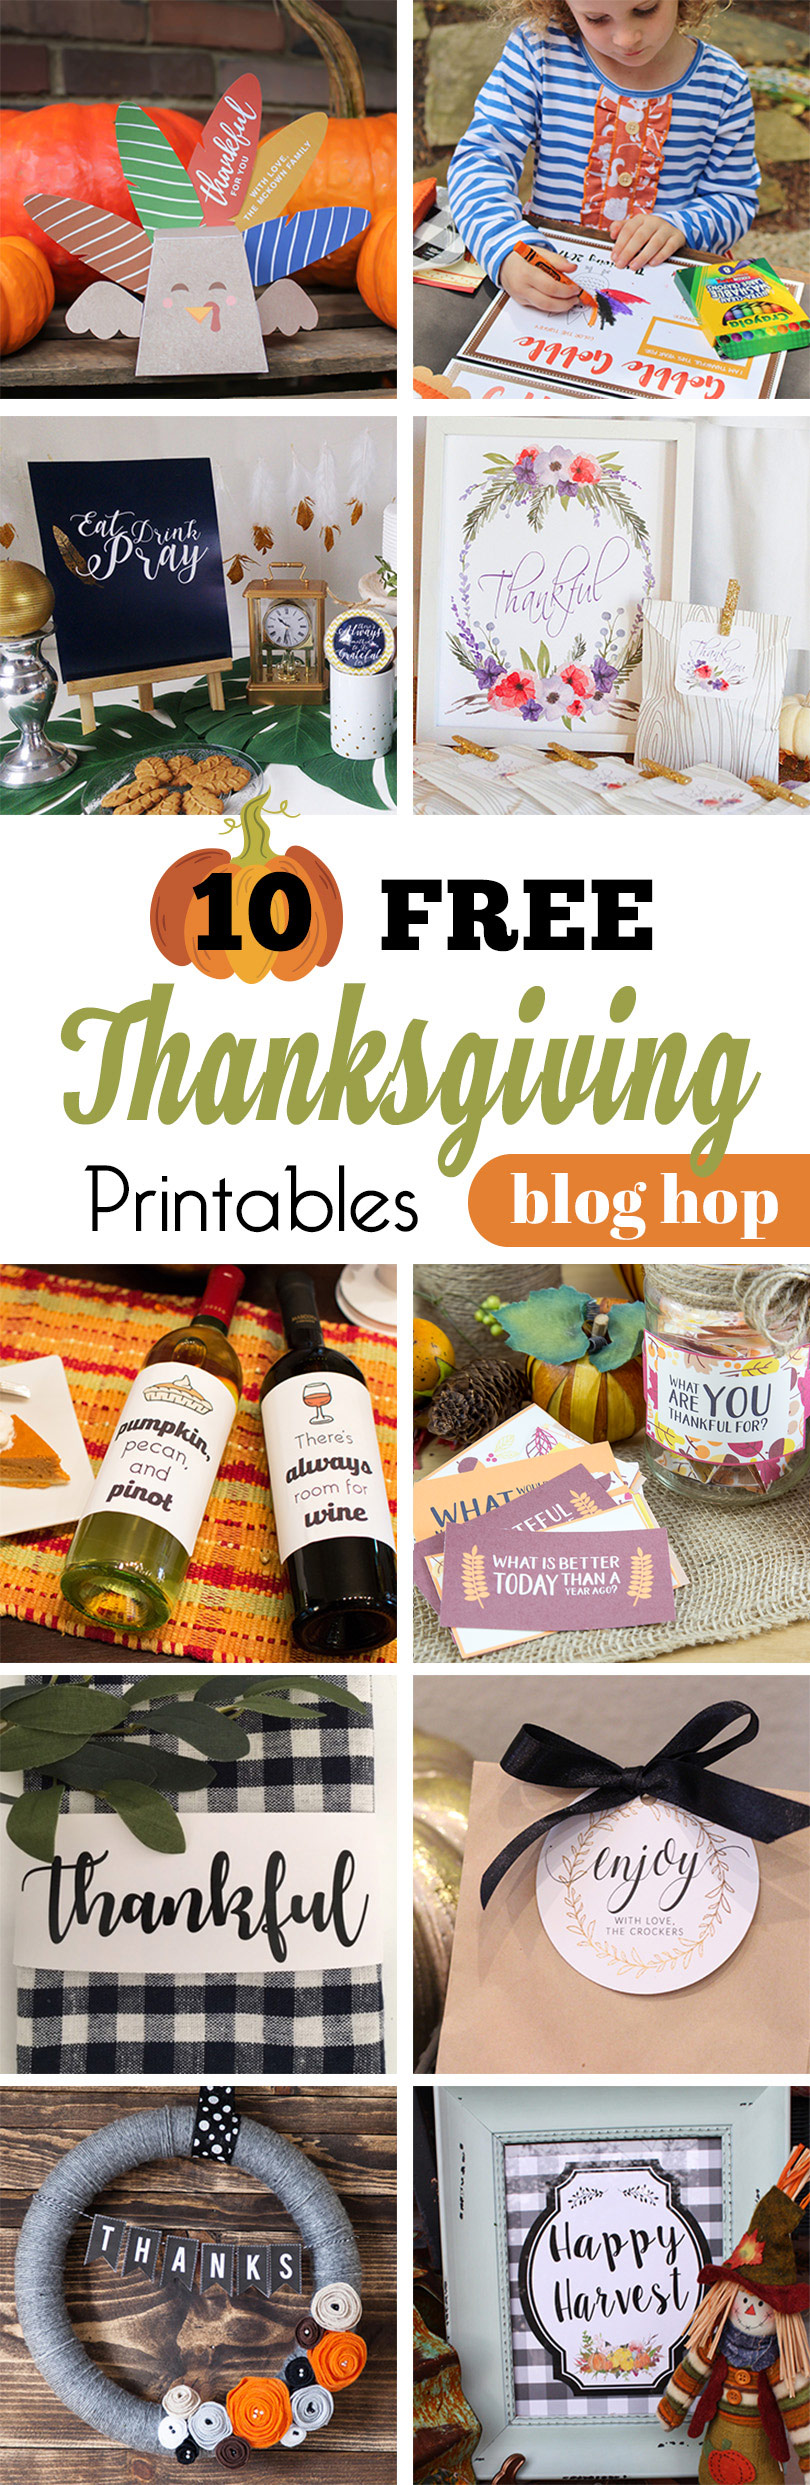 10 FREE Thanksgiving Printables Blog Hop! 